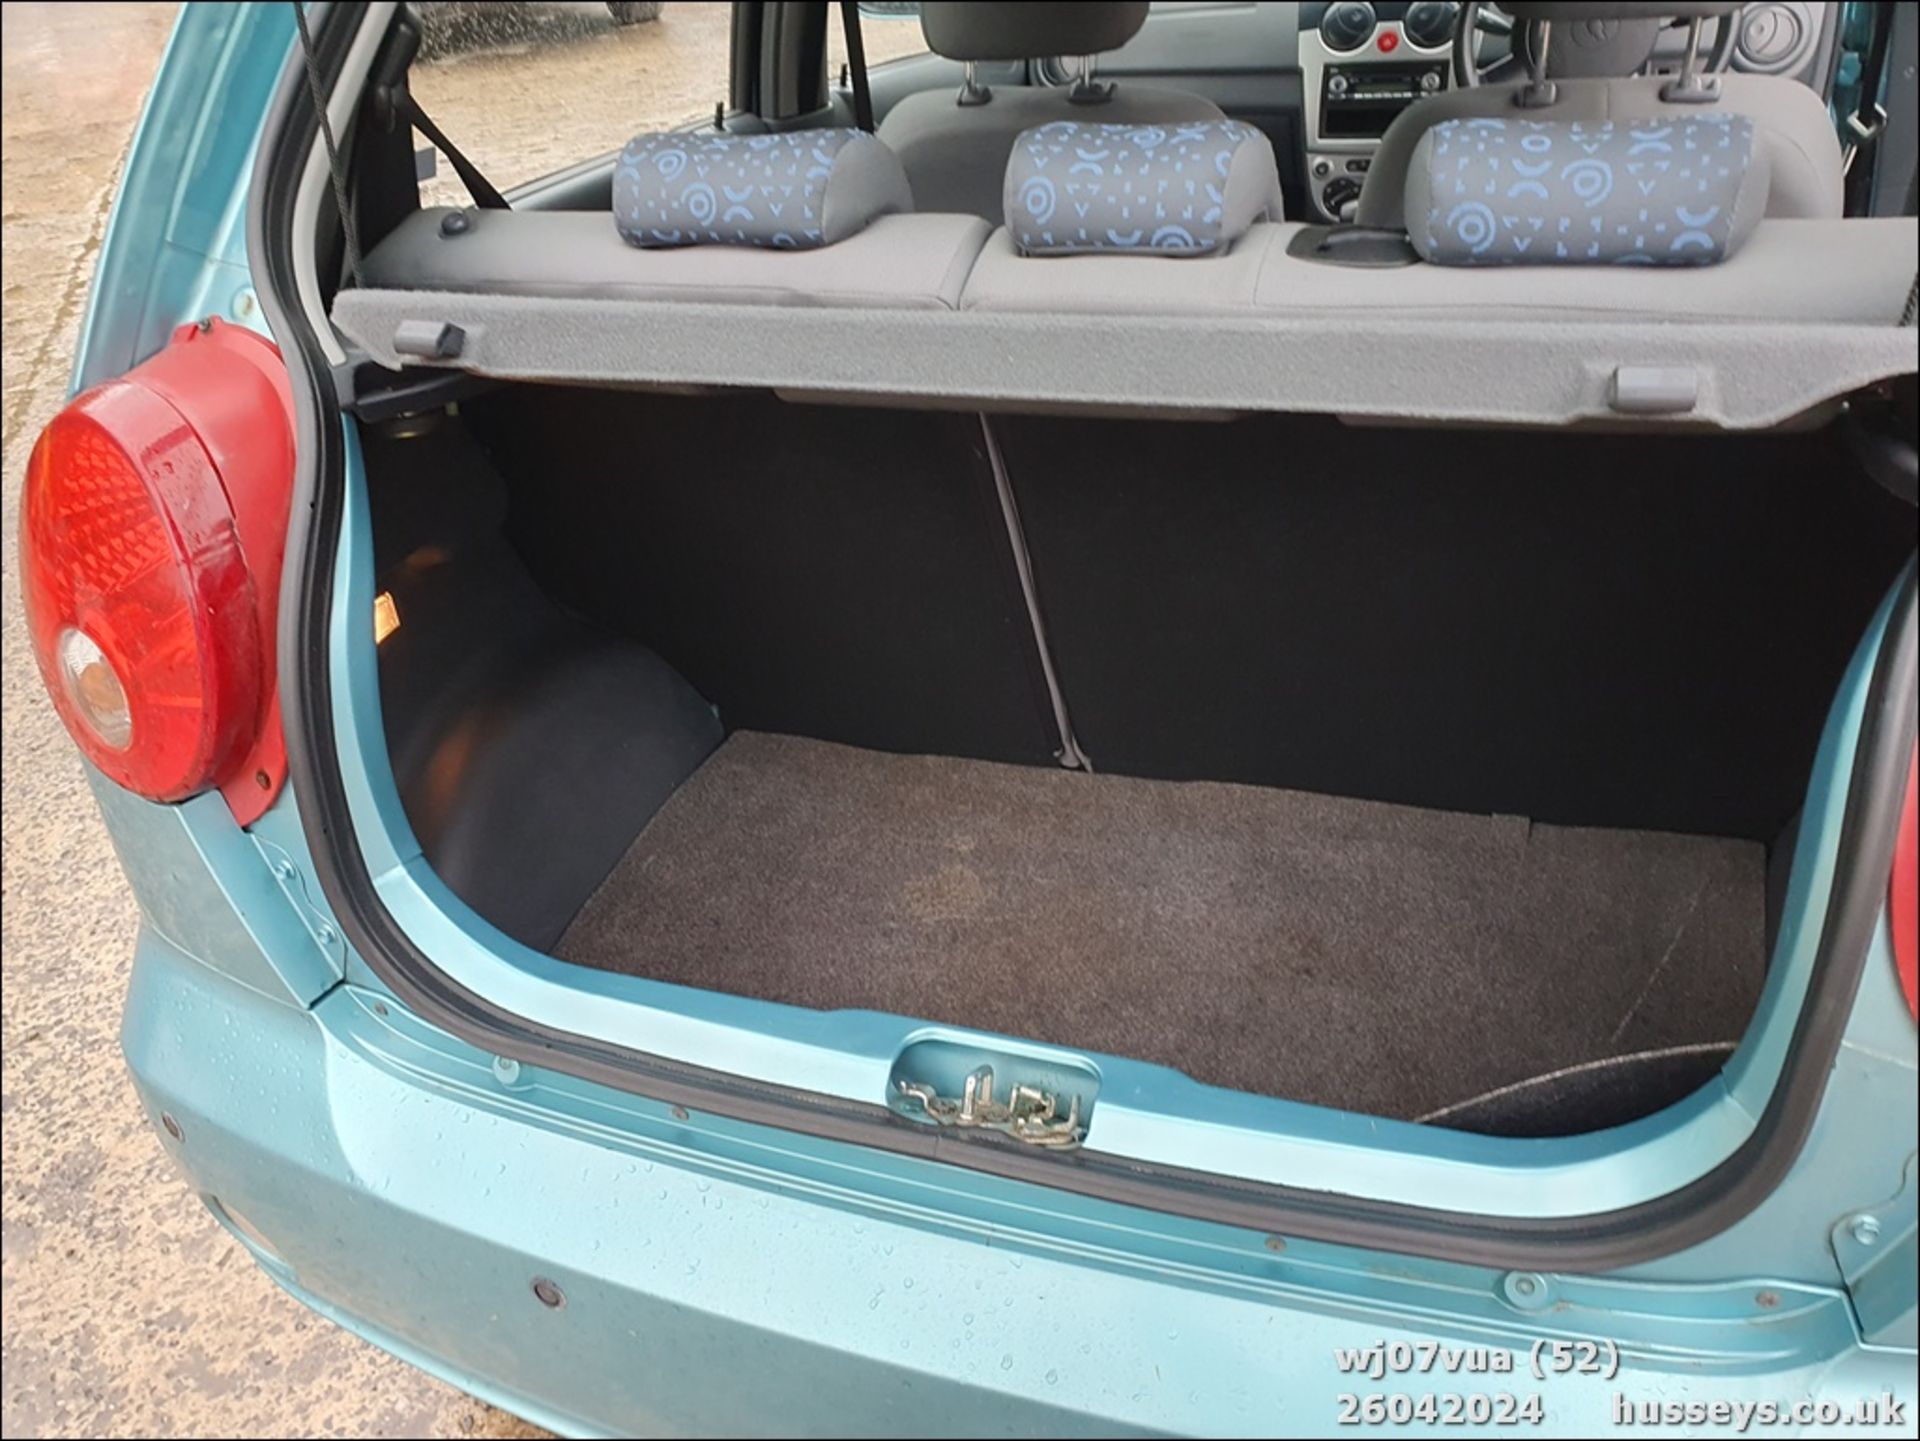 07/07 CHEVROLET MATIZ SE AUTO - 796cc 5dr Hatchback (Blue, 36k) - Image 53 of 56